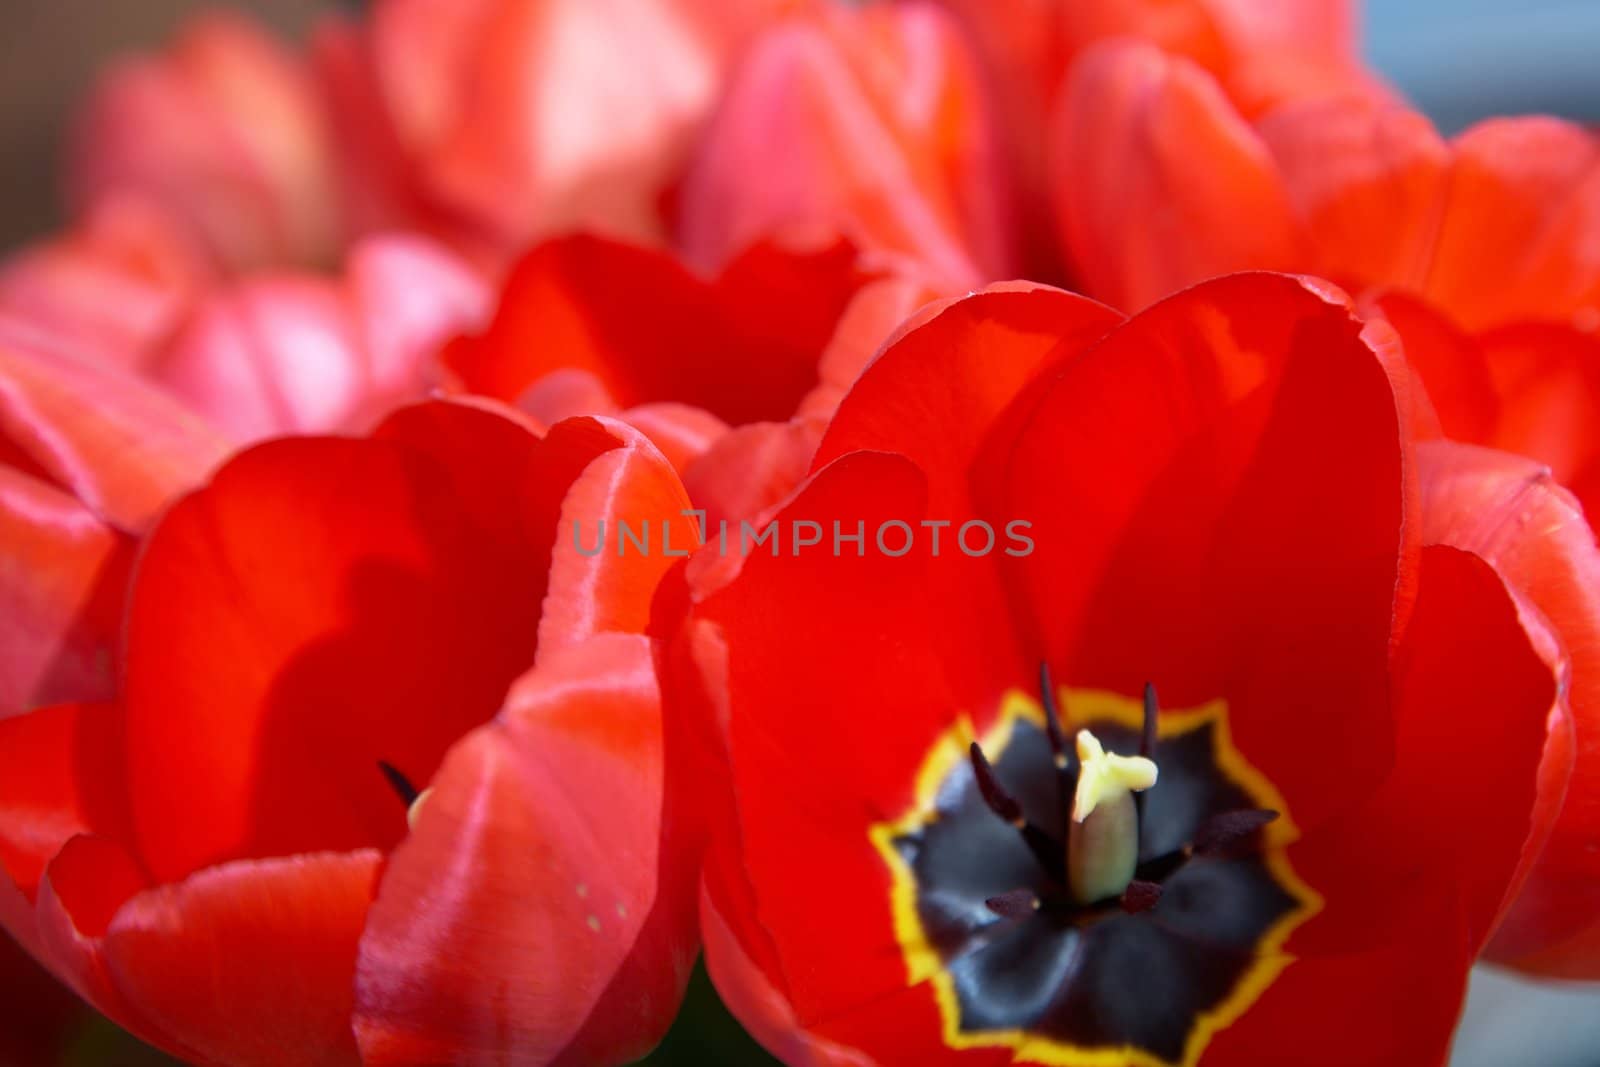 An image of nice tulips